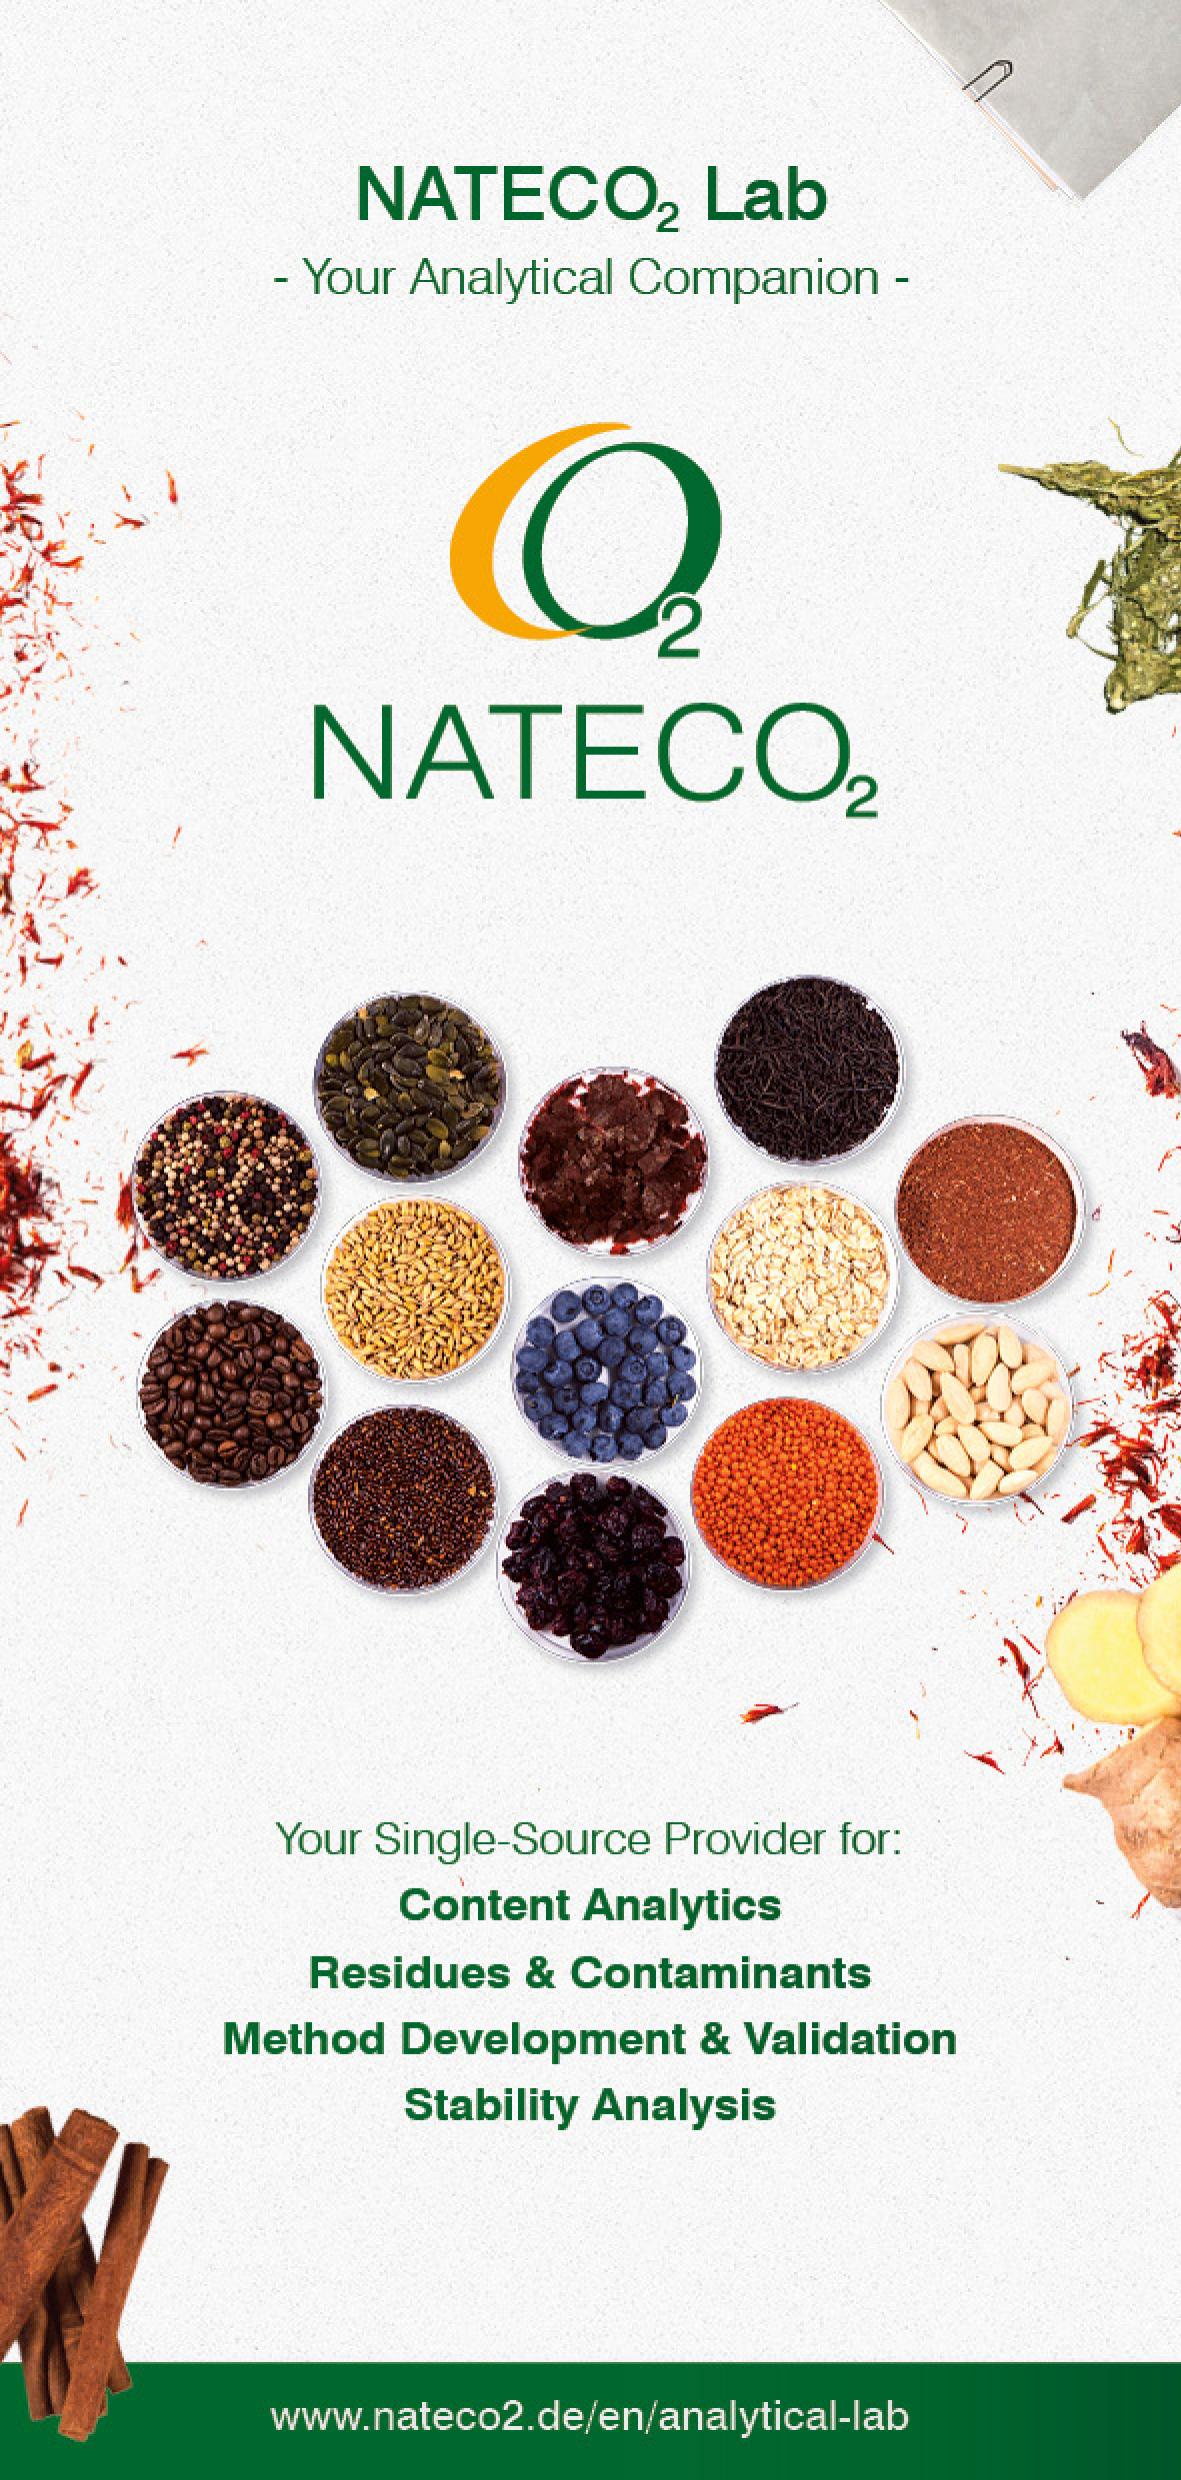 NATECO2 Laboratory - Your Analytical Companion